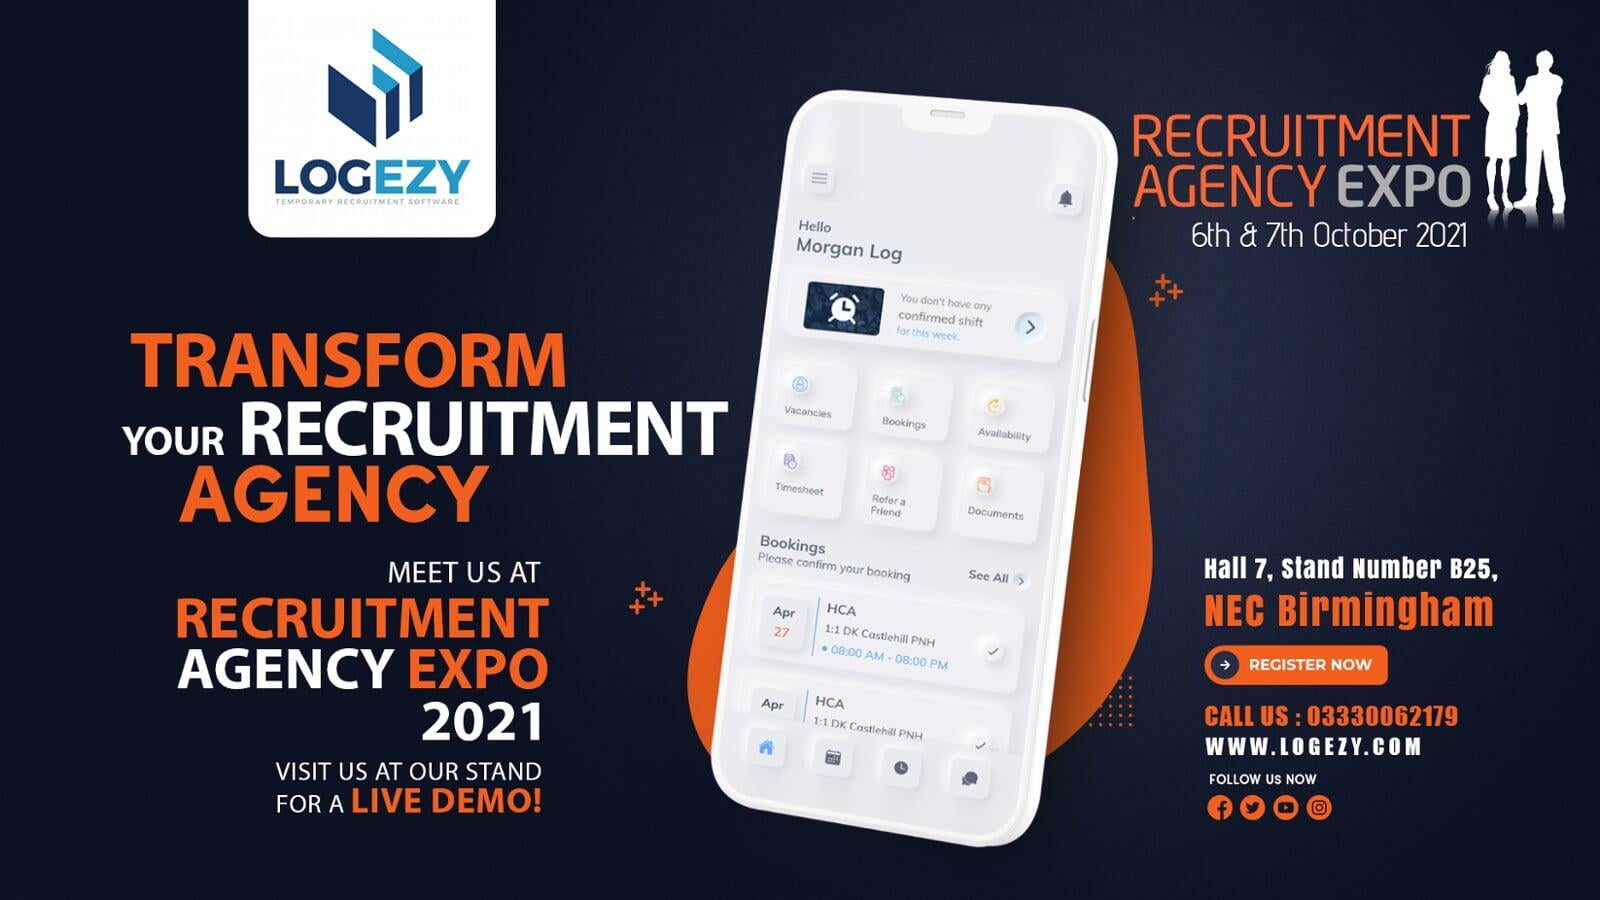 Recruitment Agency Expo 2021